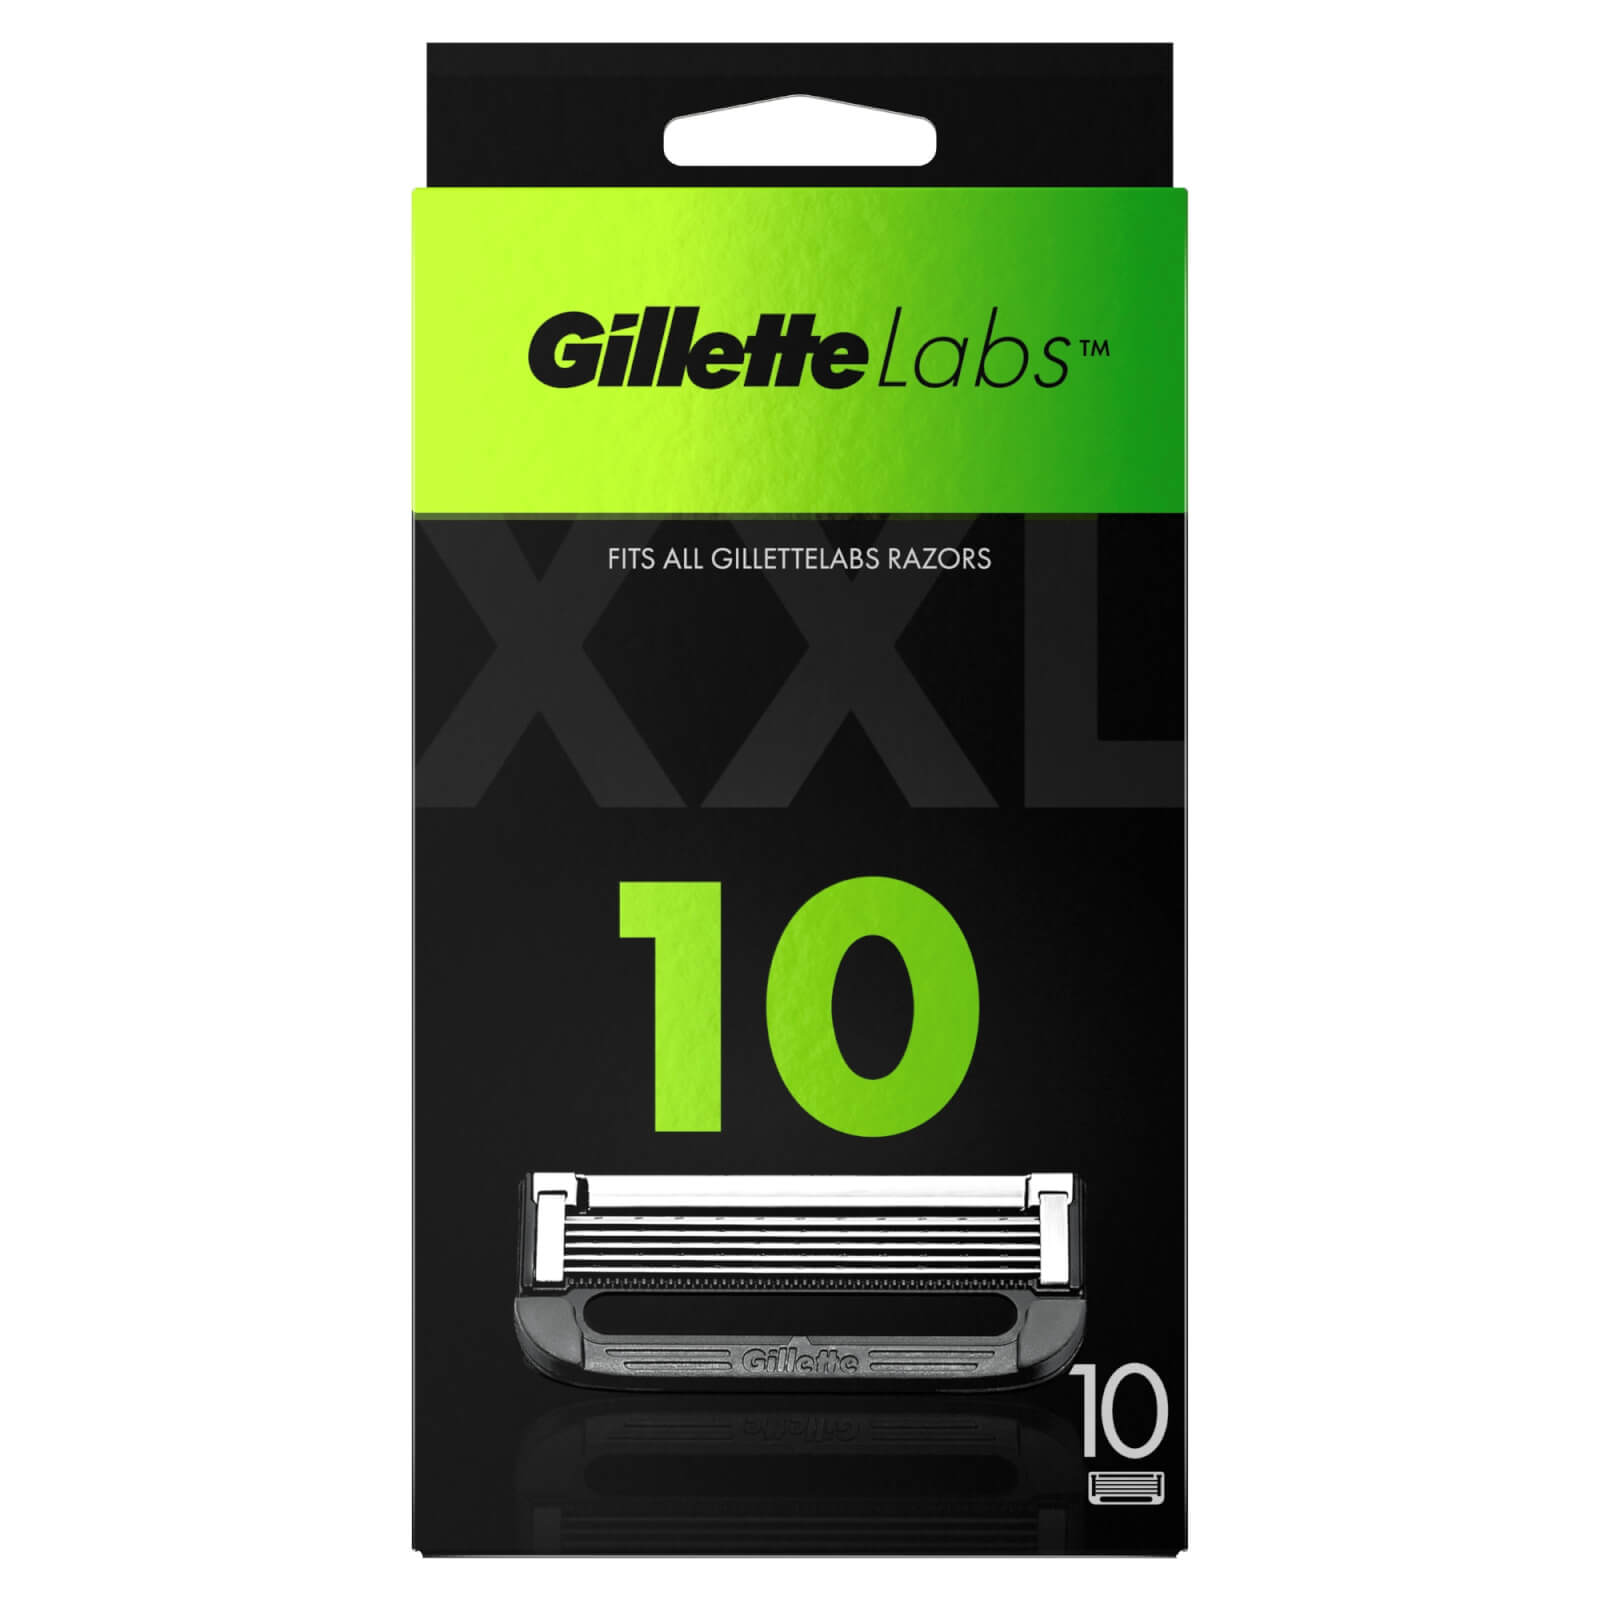 Gillette Labs Razor Blades Refill Packs - 10 Pack